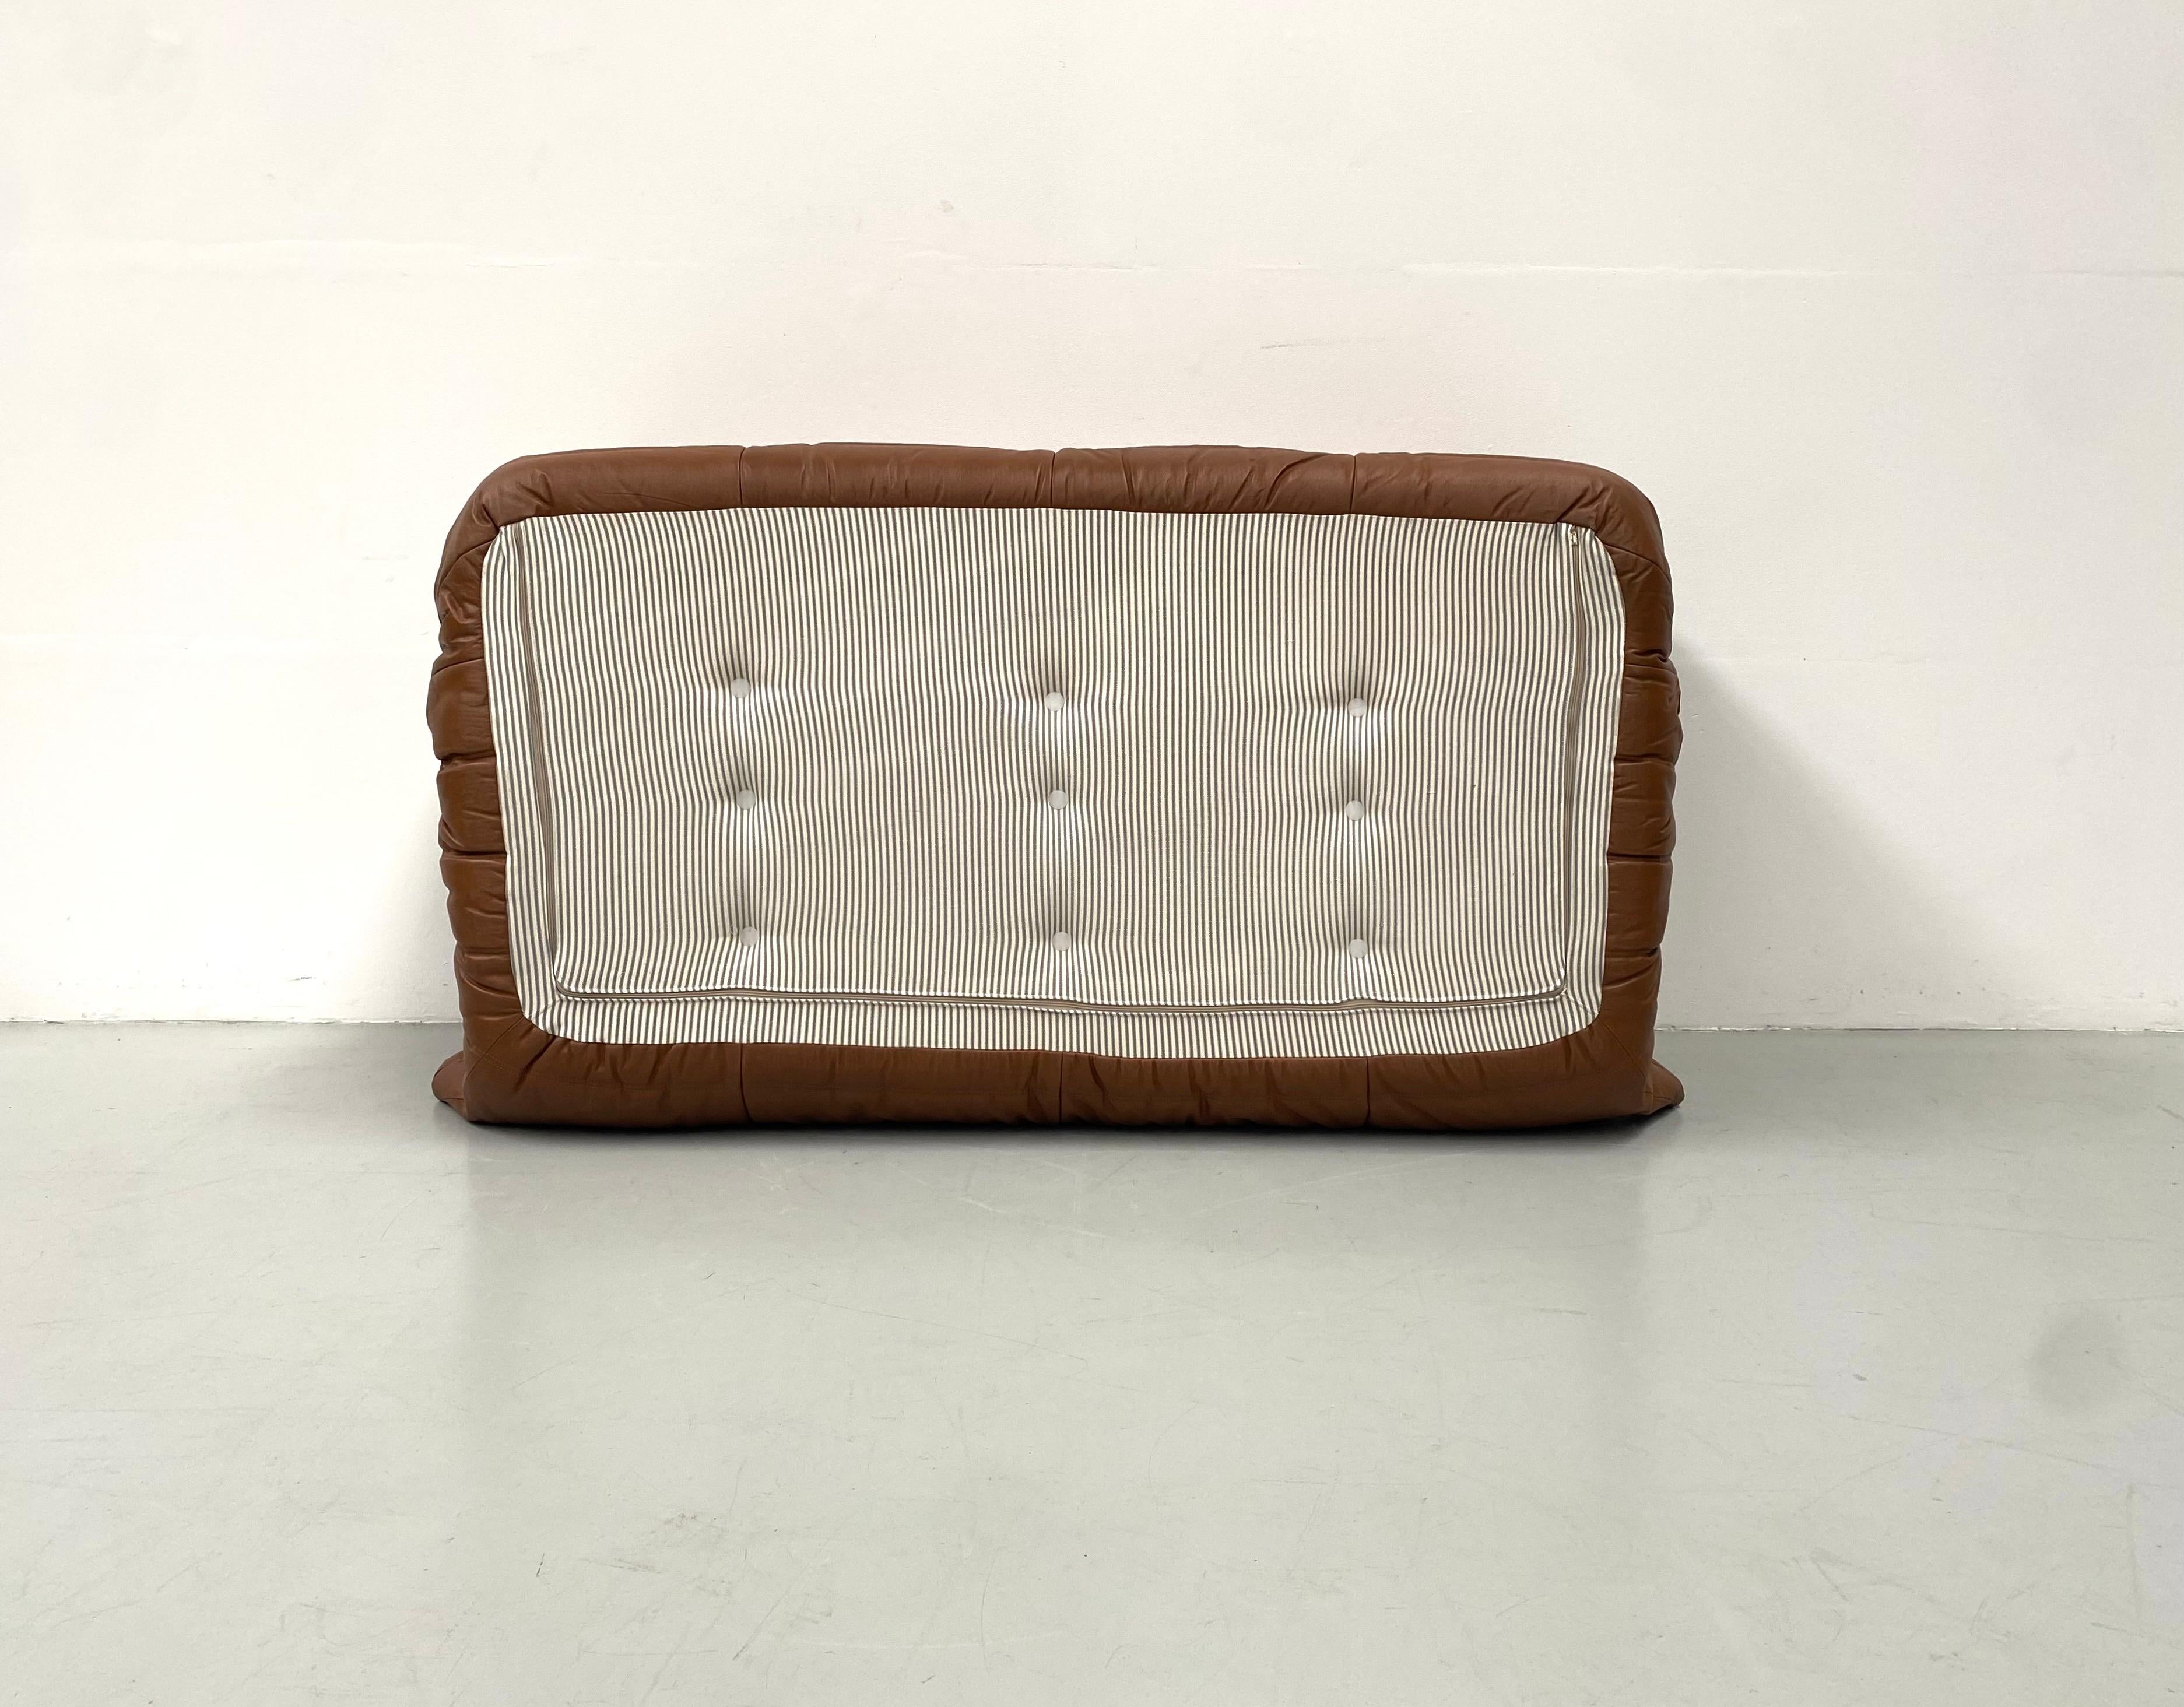 20th Century Vintage Togo Sofa in Dark Cognac Leather by Michel Ducaroy for Ligne Roset. For Sale